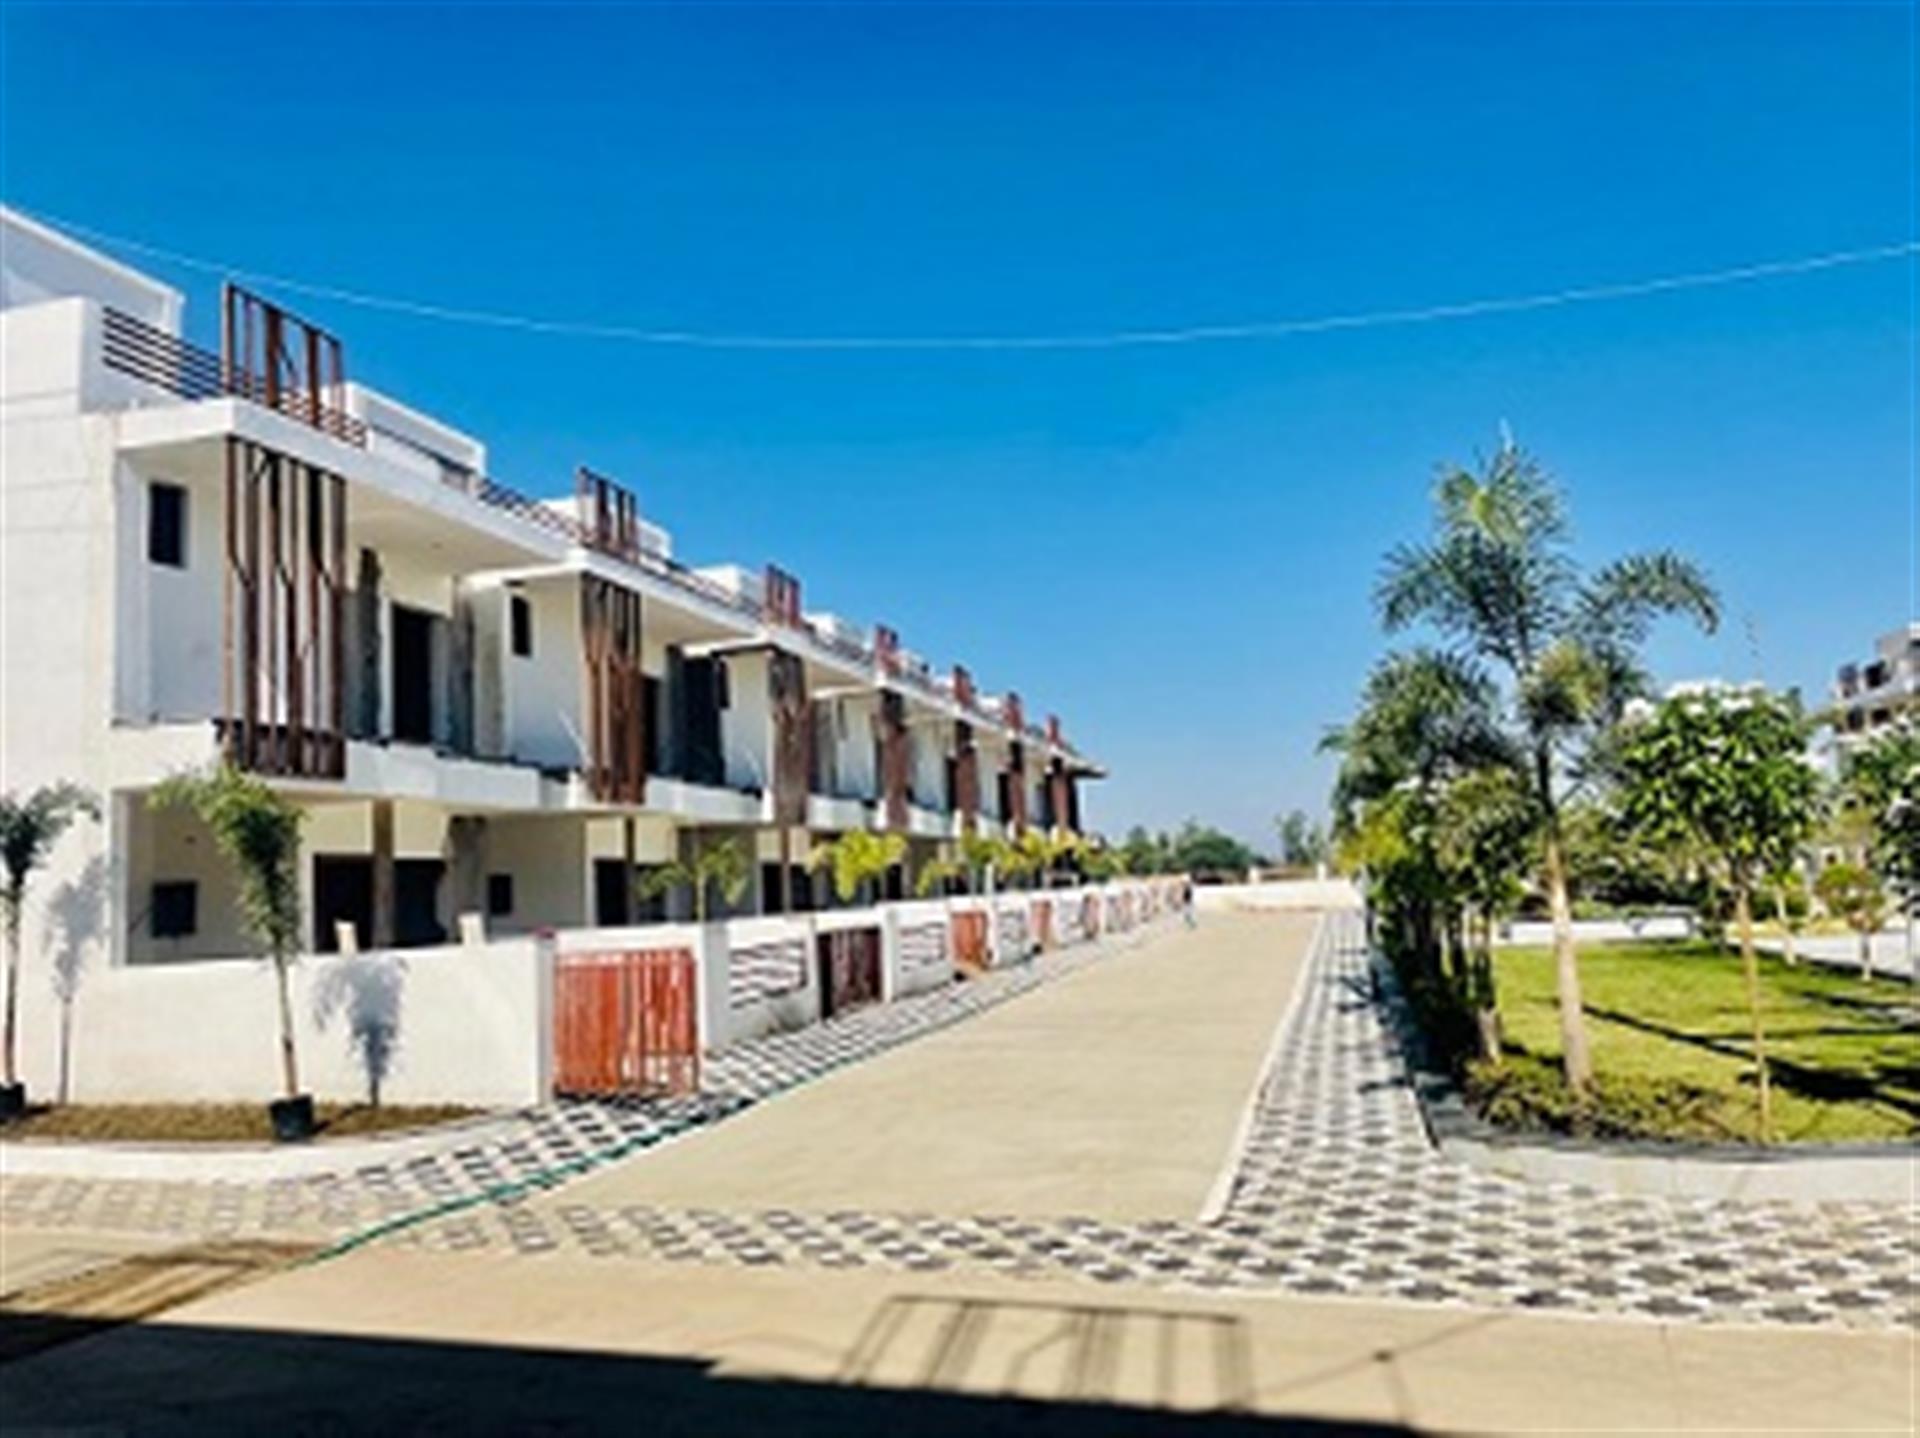 sage-milestone-hoshangabad-road-bhopal-3-4bhk-villas-residential-plots-villa-house